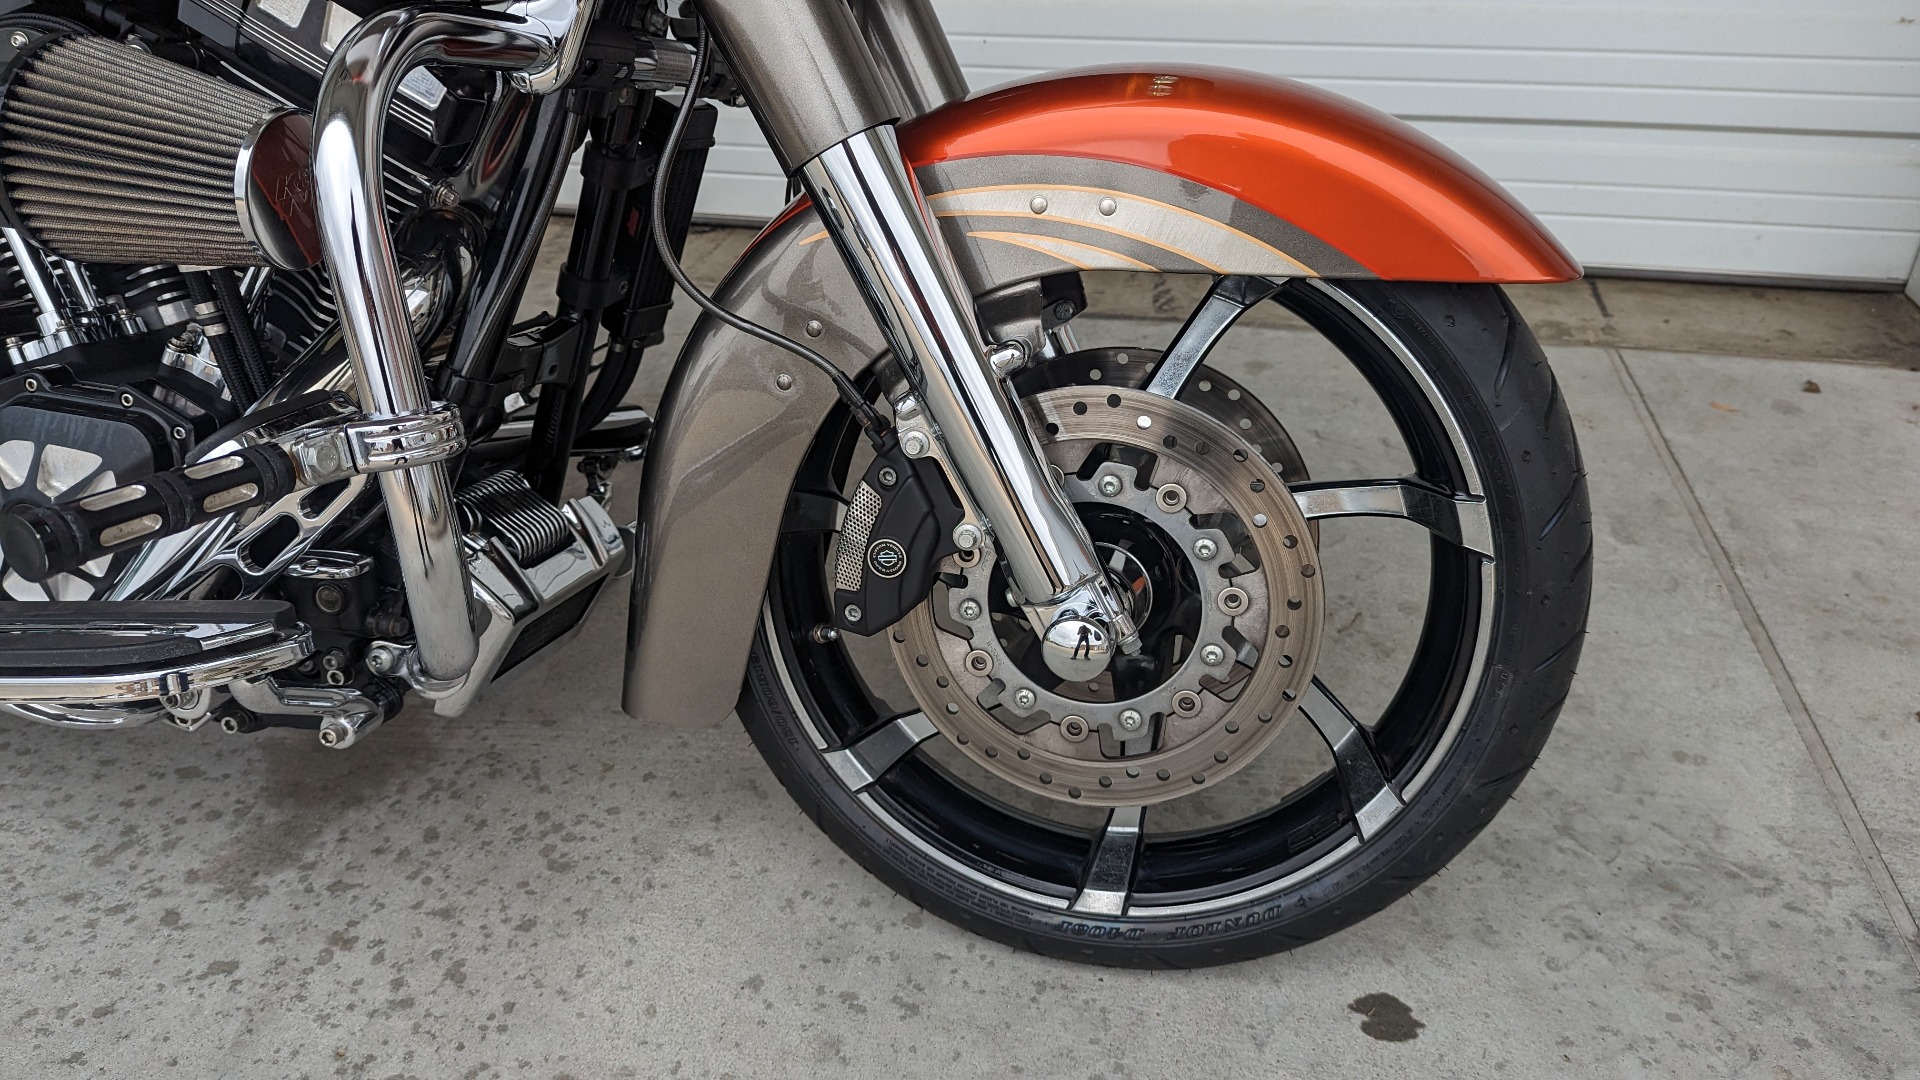 2013 Harley-Davidson CVO™ Road Glide® Custom in Monroe, Louisiana - Photo 3